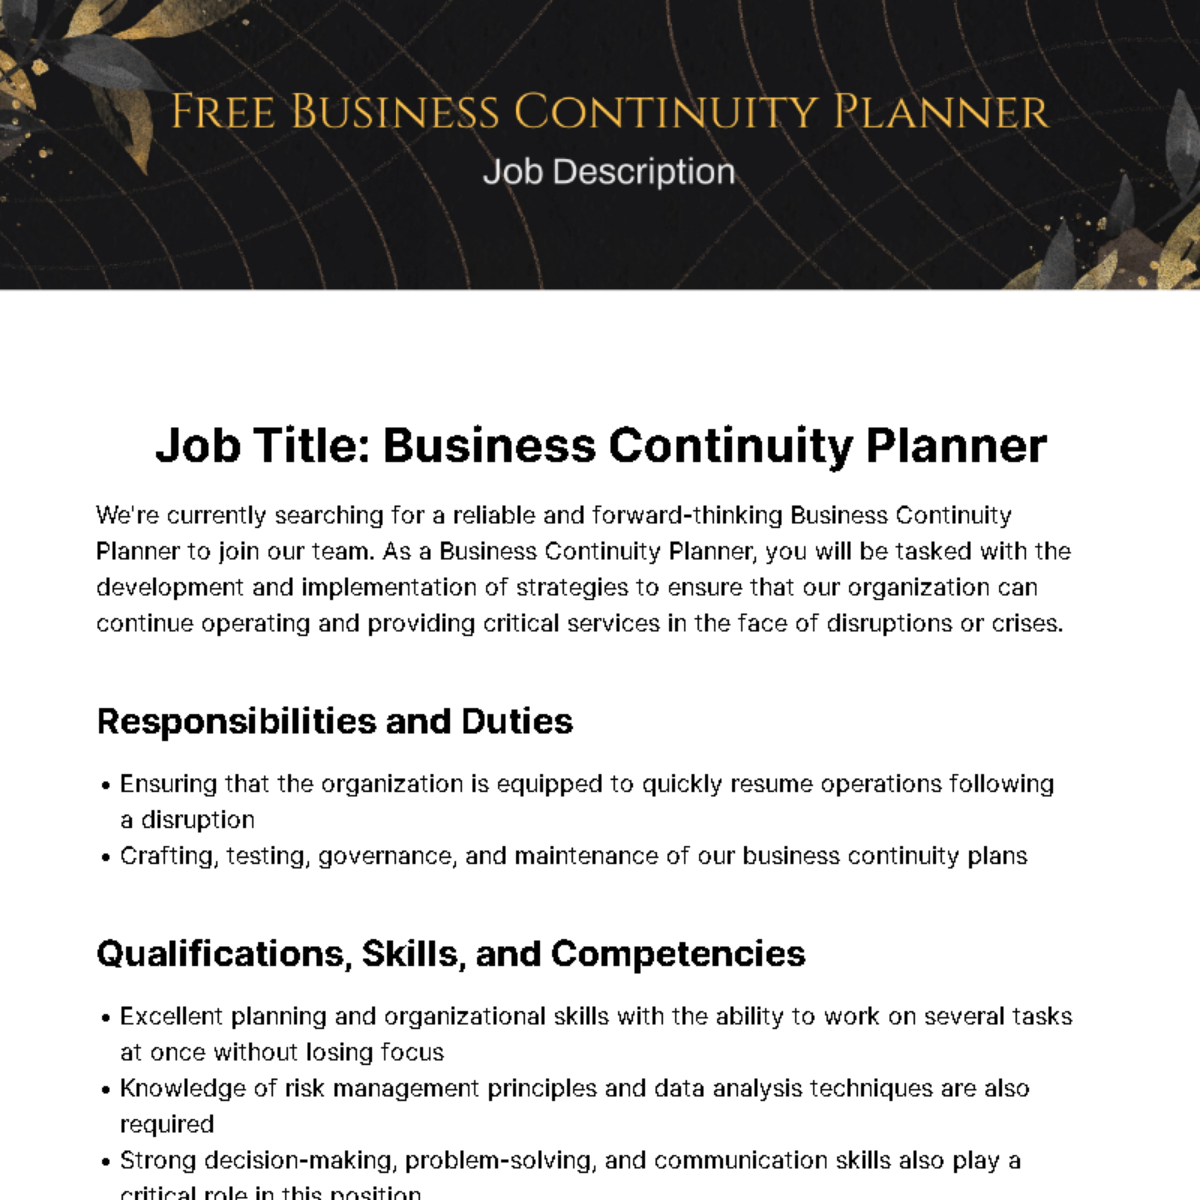 Free Business Continuity Planner Job Description Template